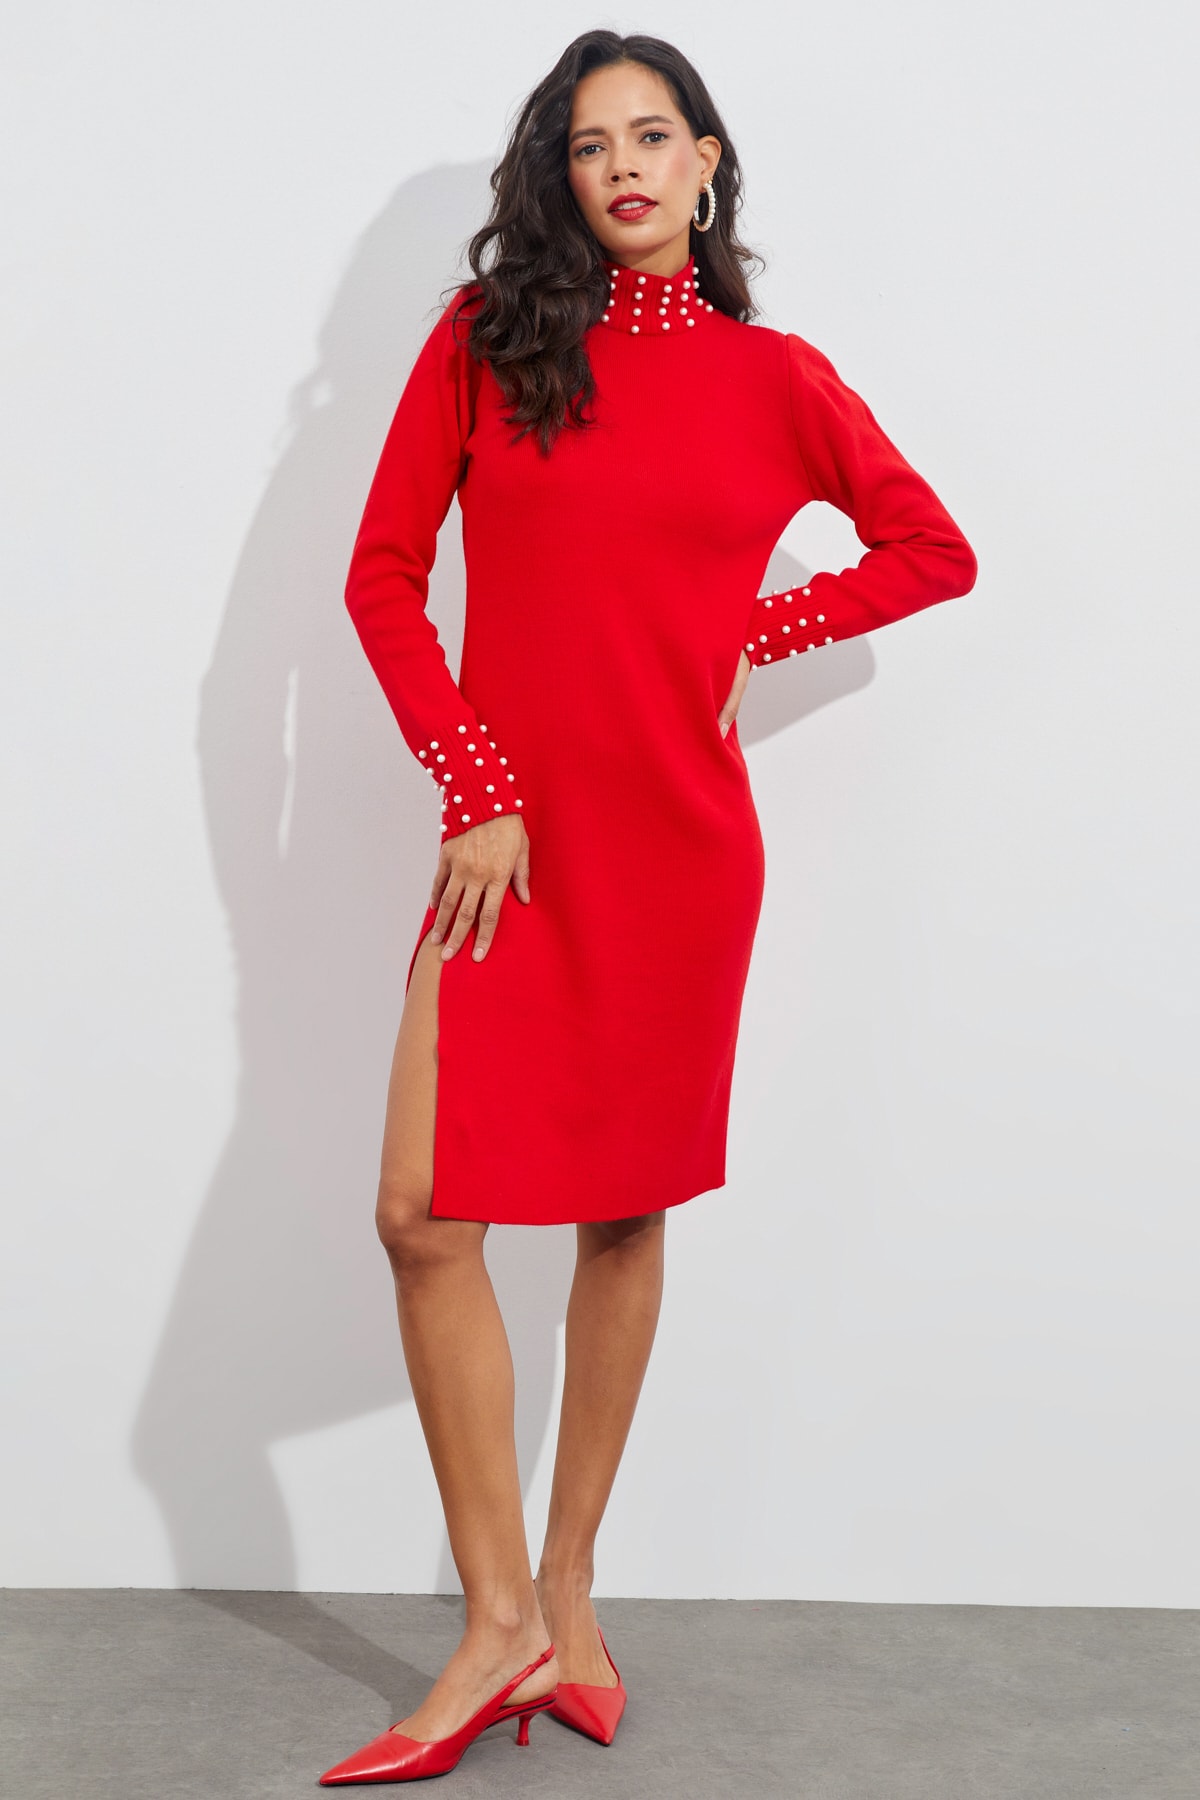 Cool & Sexy Kleid Rot Wickelschnitt Fast ausverkauft